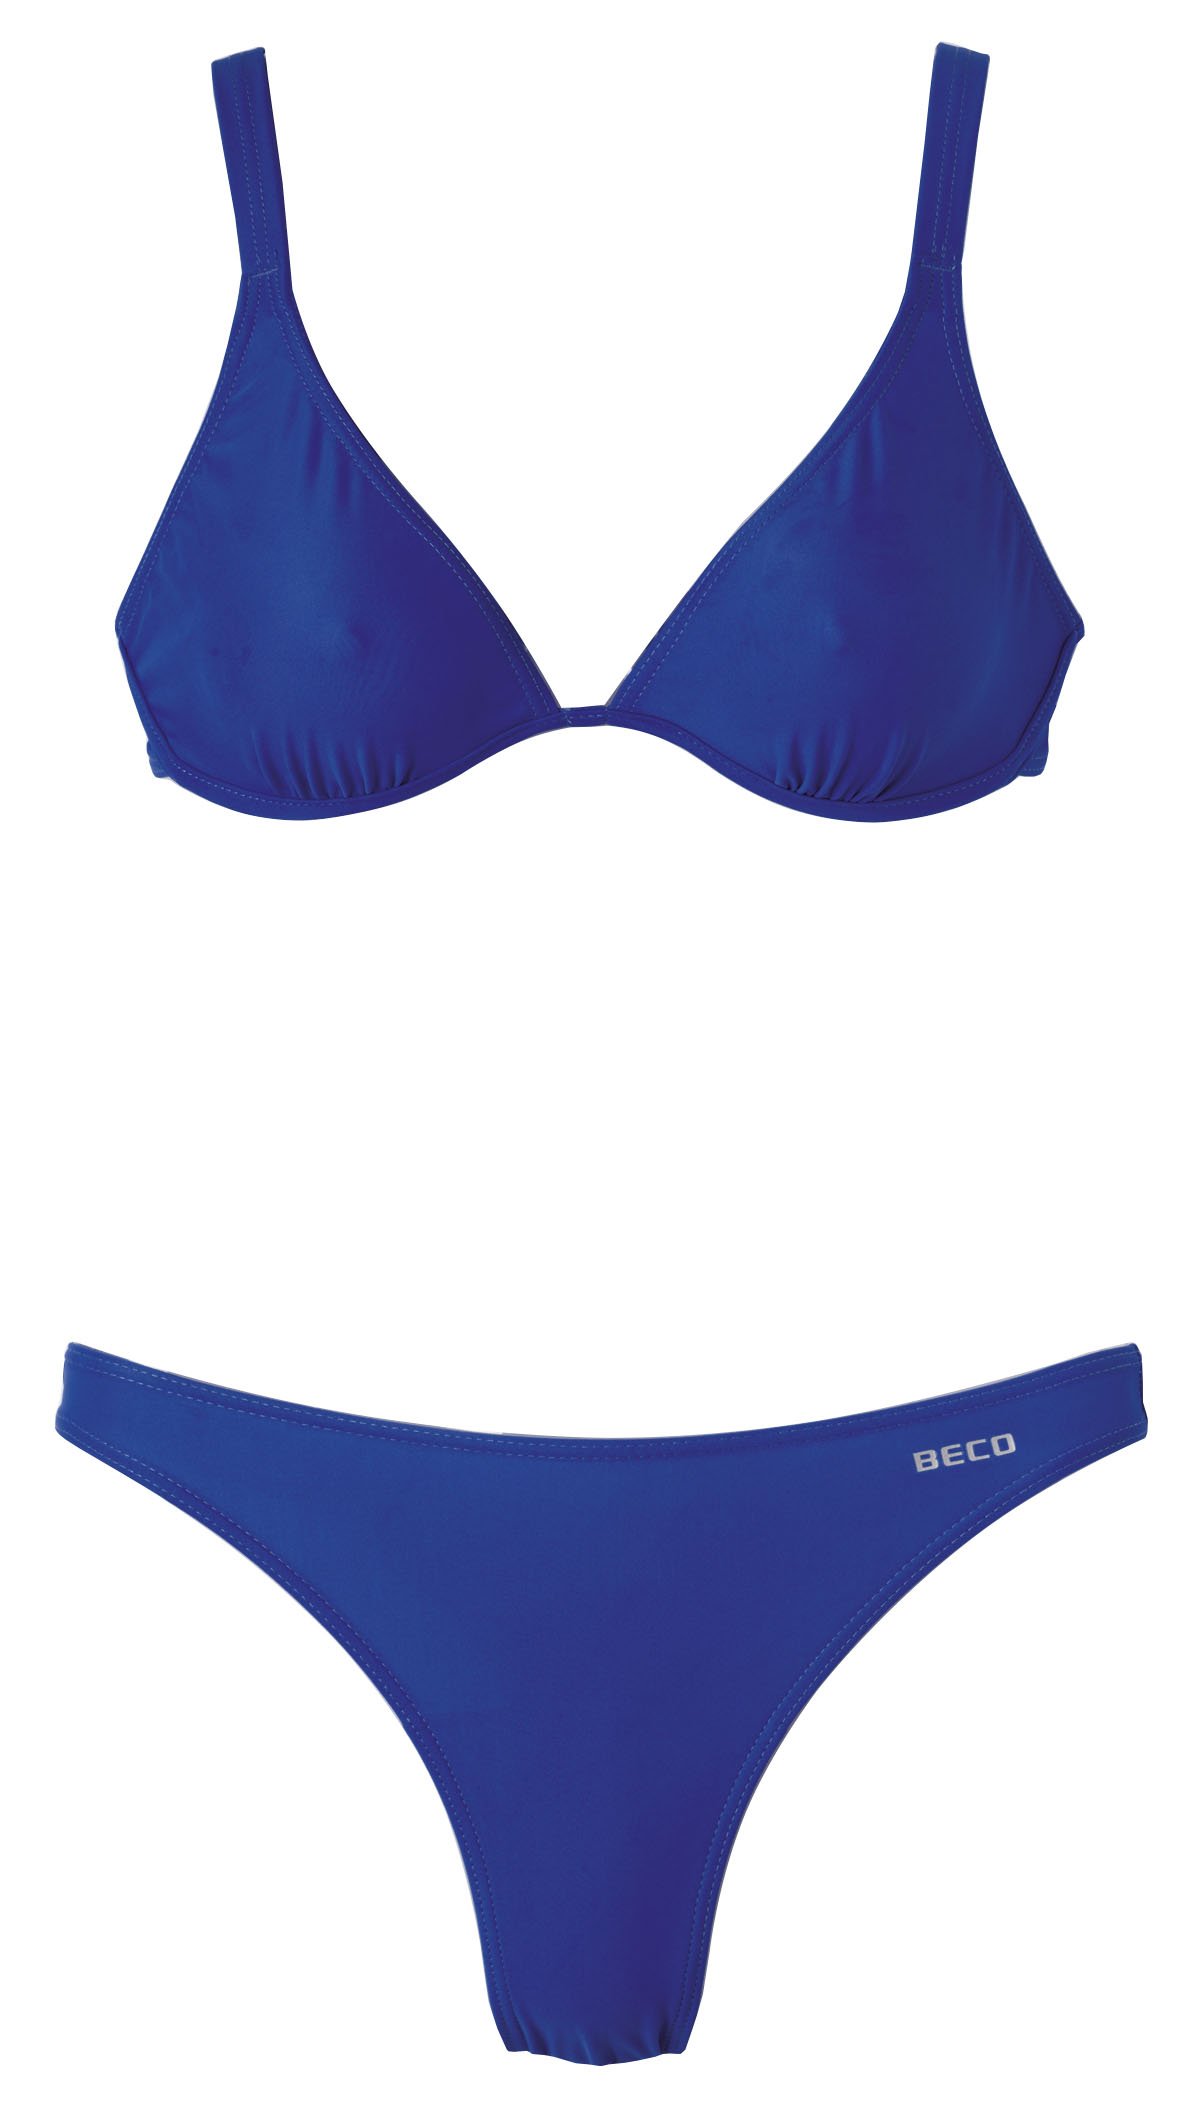 Beco Damen Schwimmkleidung Bikini-Set, blau, 40